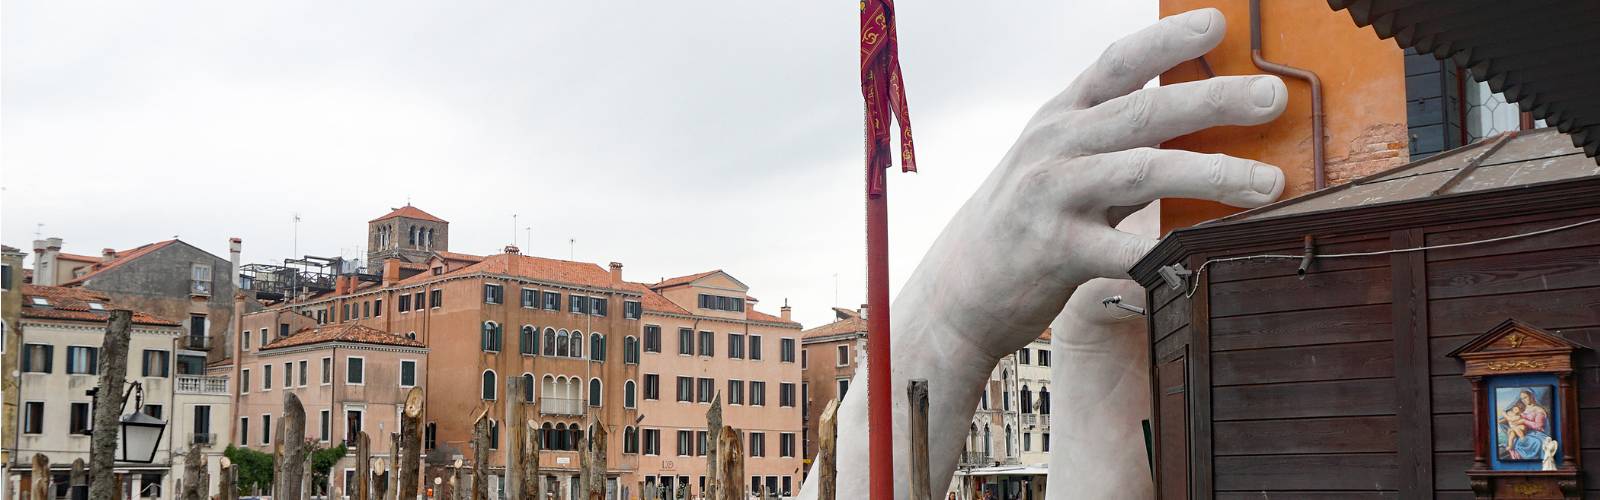 Interesting Times: The Venice Biennale and the Roman Renaissance